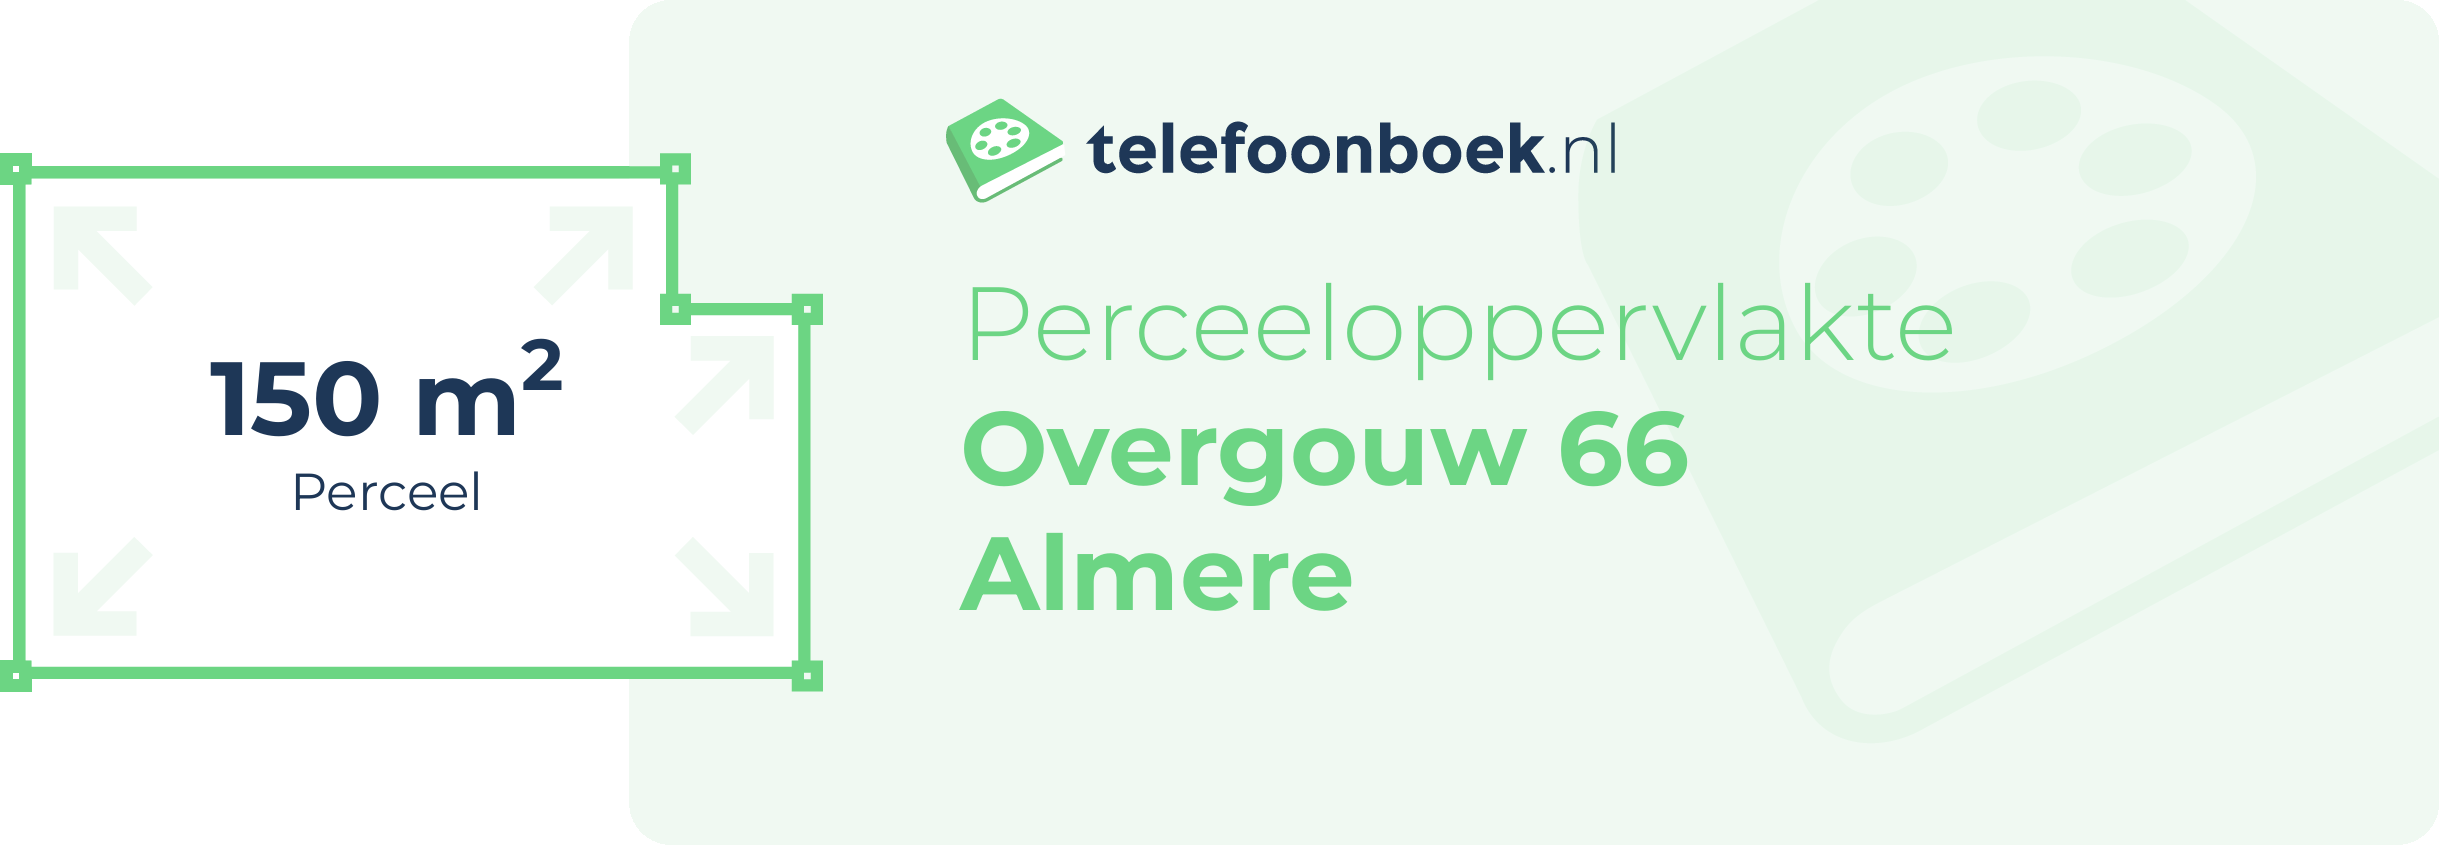 Perceeloppervlakte Overgouw 66 Almere